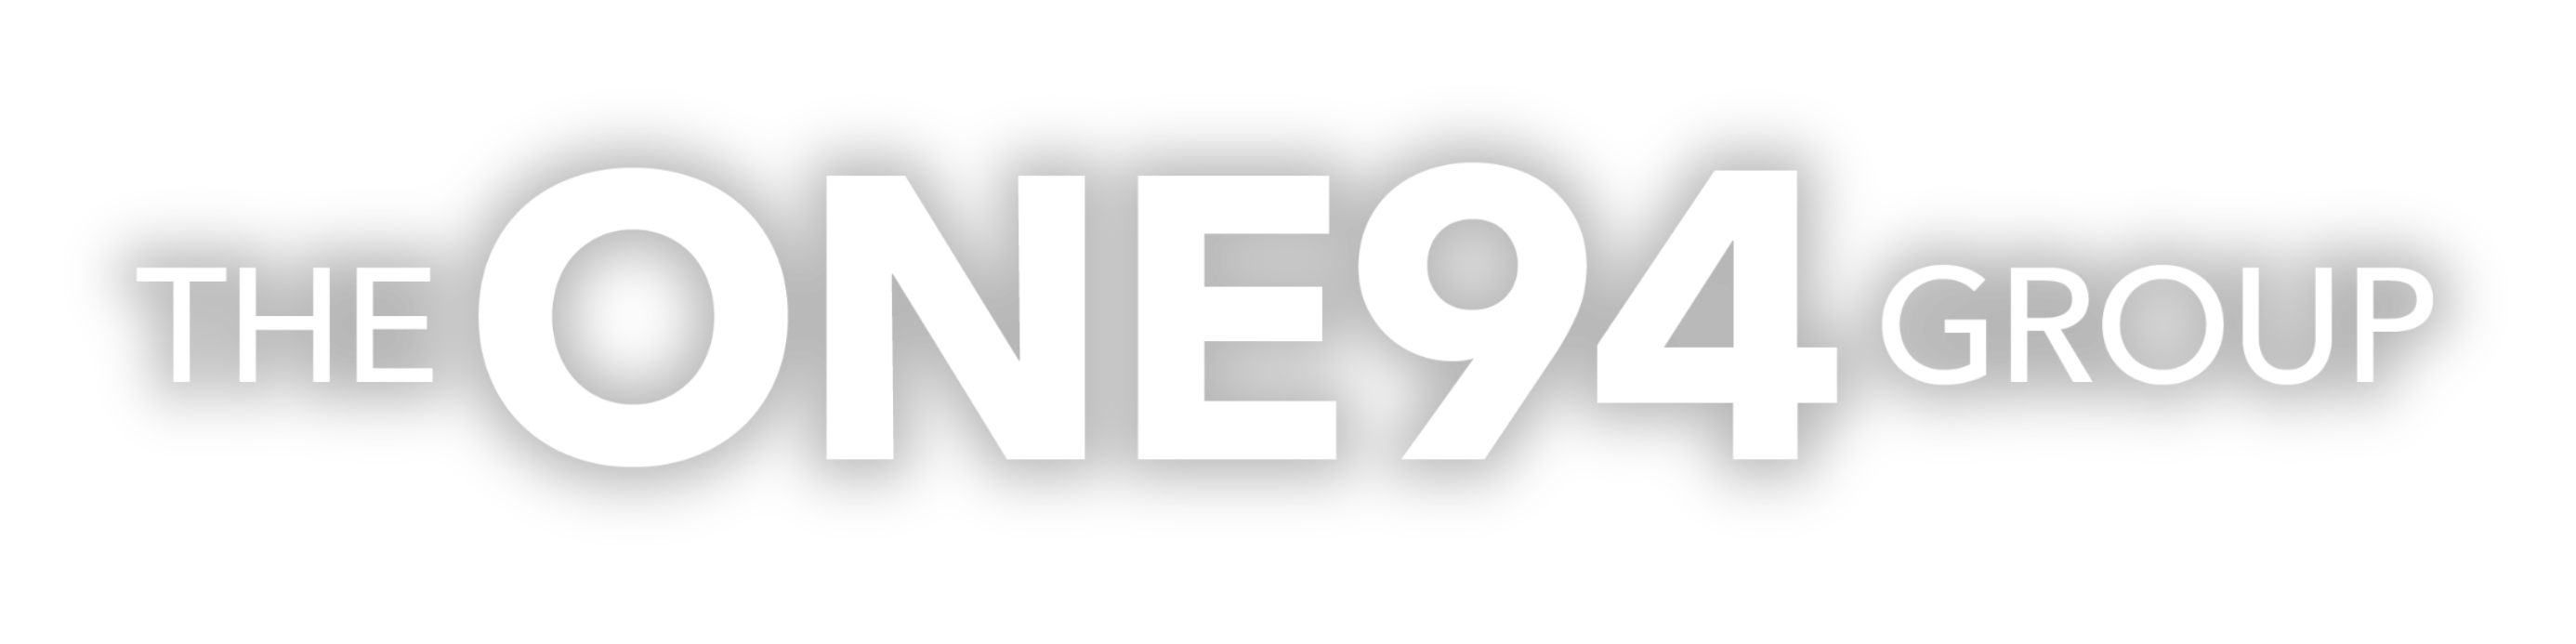 The ONE94 Group logo, white real estate team logo